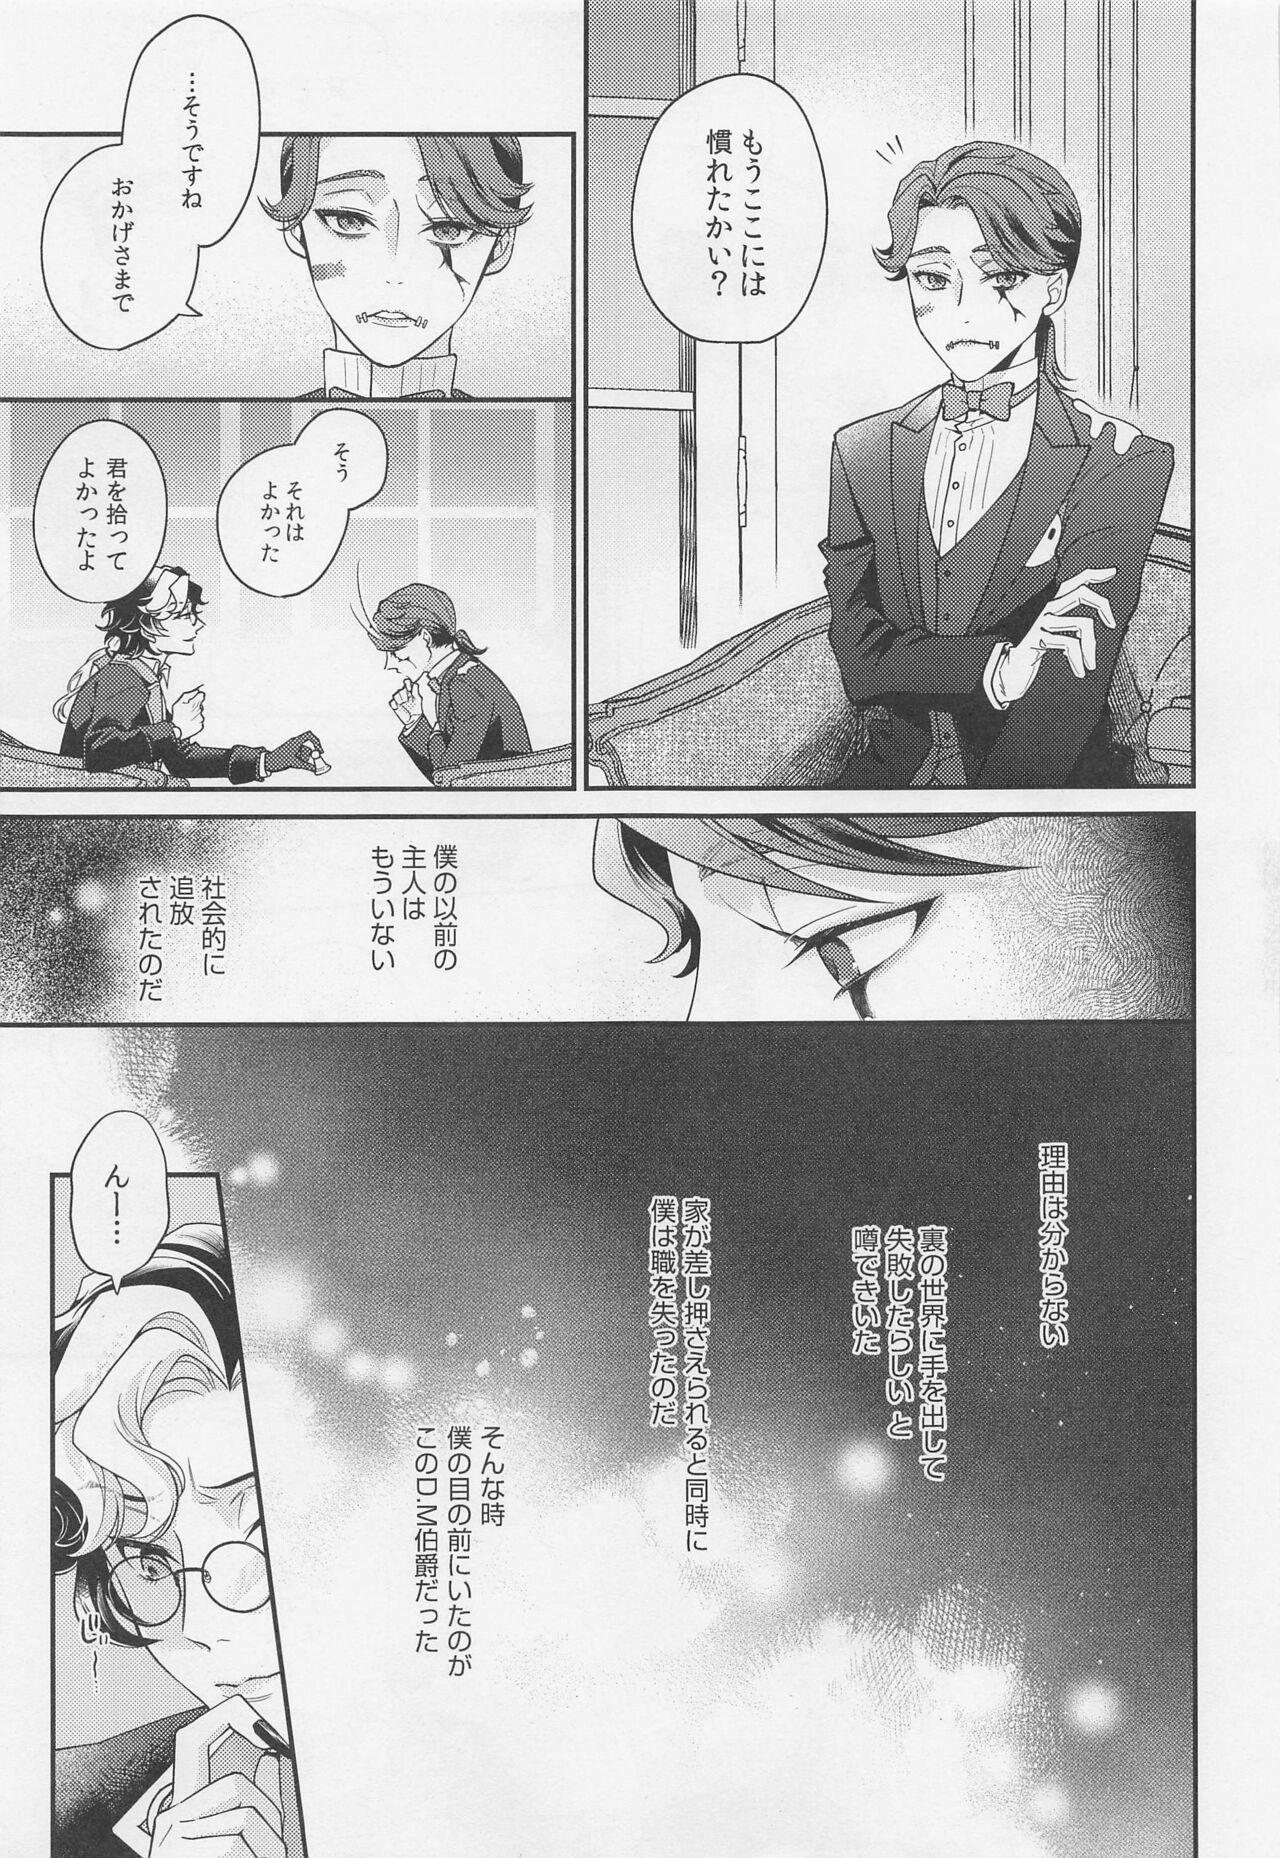 Panty tawamuretoyobunaraba - Identity v Teenie - Page 6